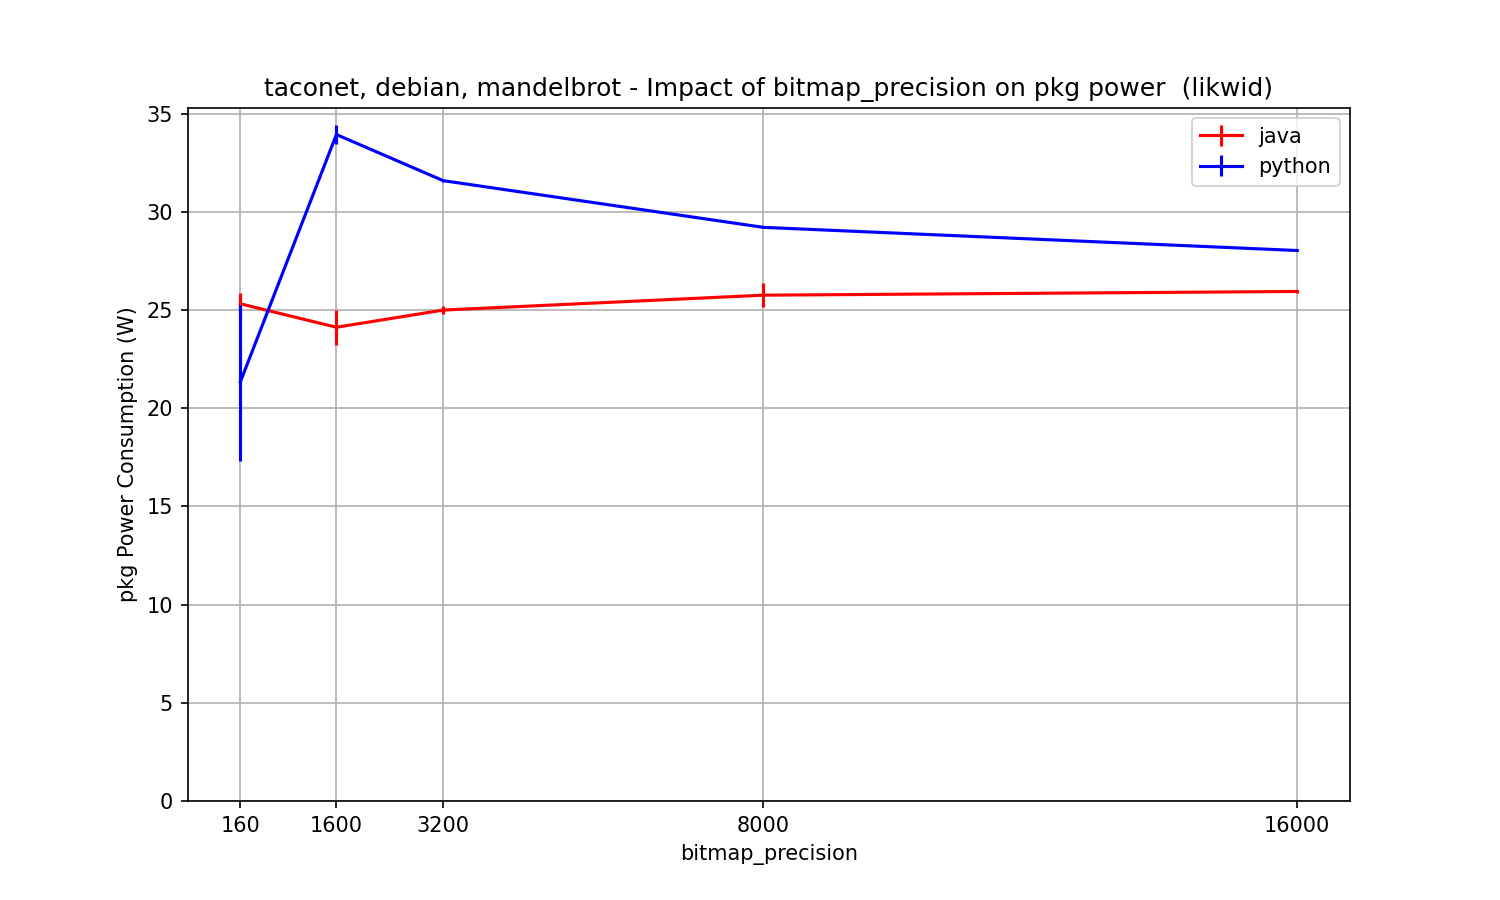 tp-likwid-files/b01-01-mandelbrot-results/taconet_b01-01_mandelbrot_bitmap_precision_impact_pkg_power.png